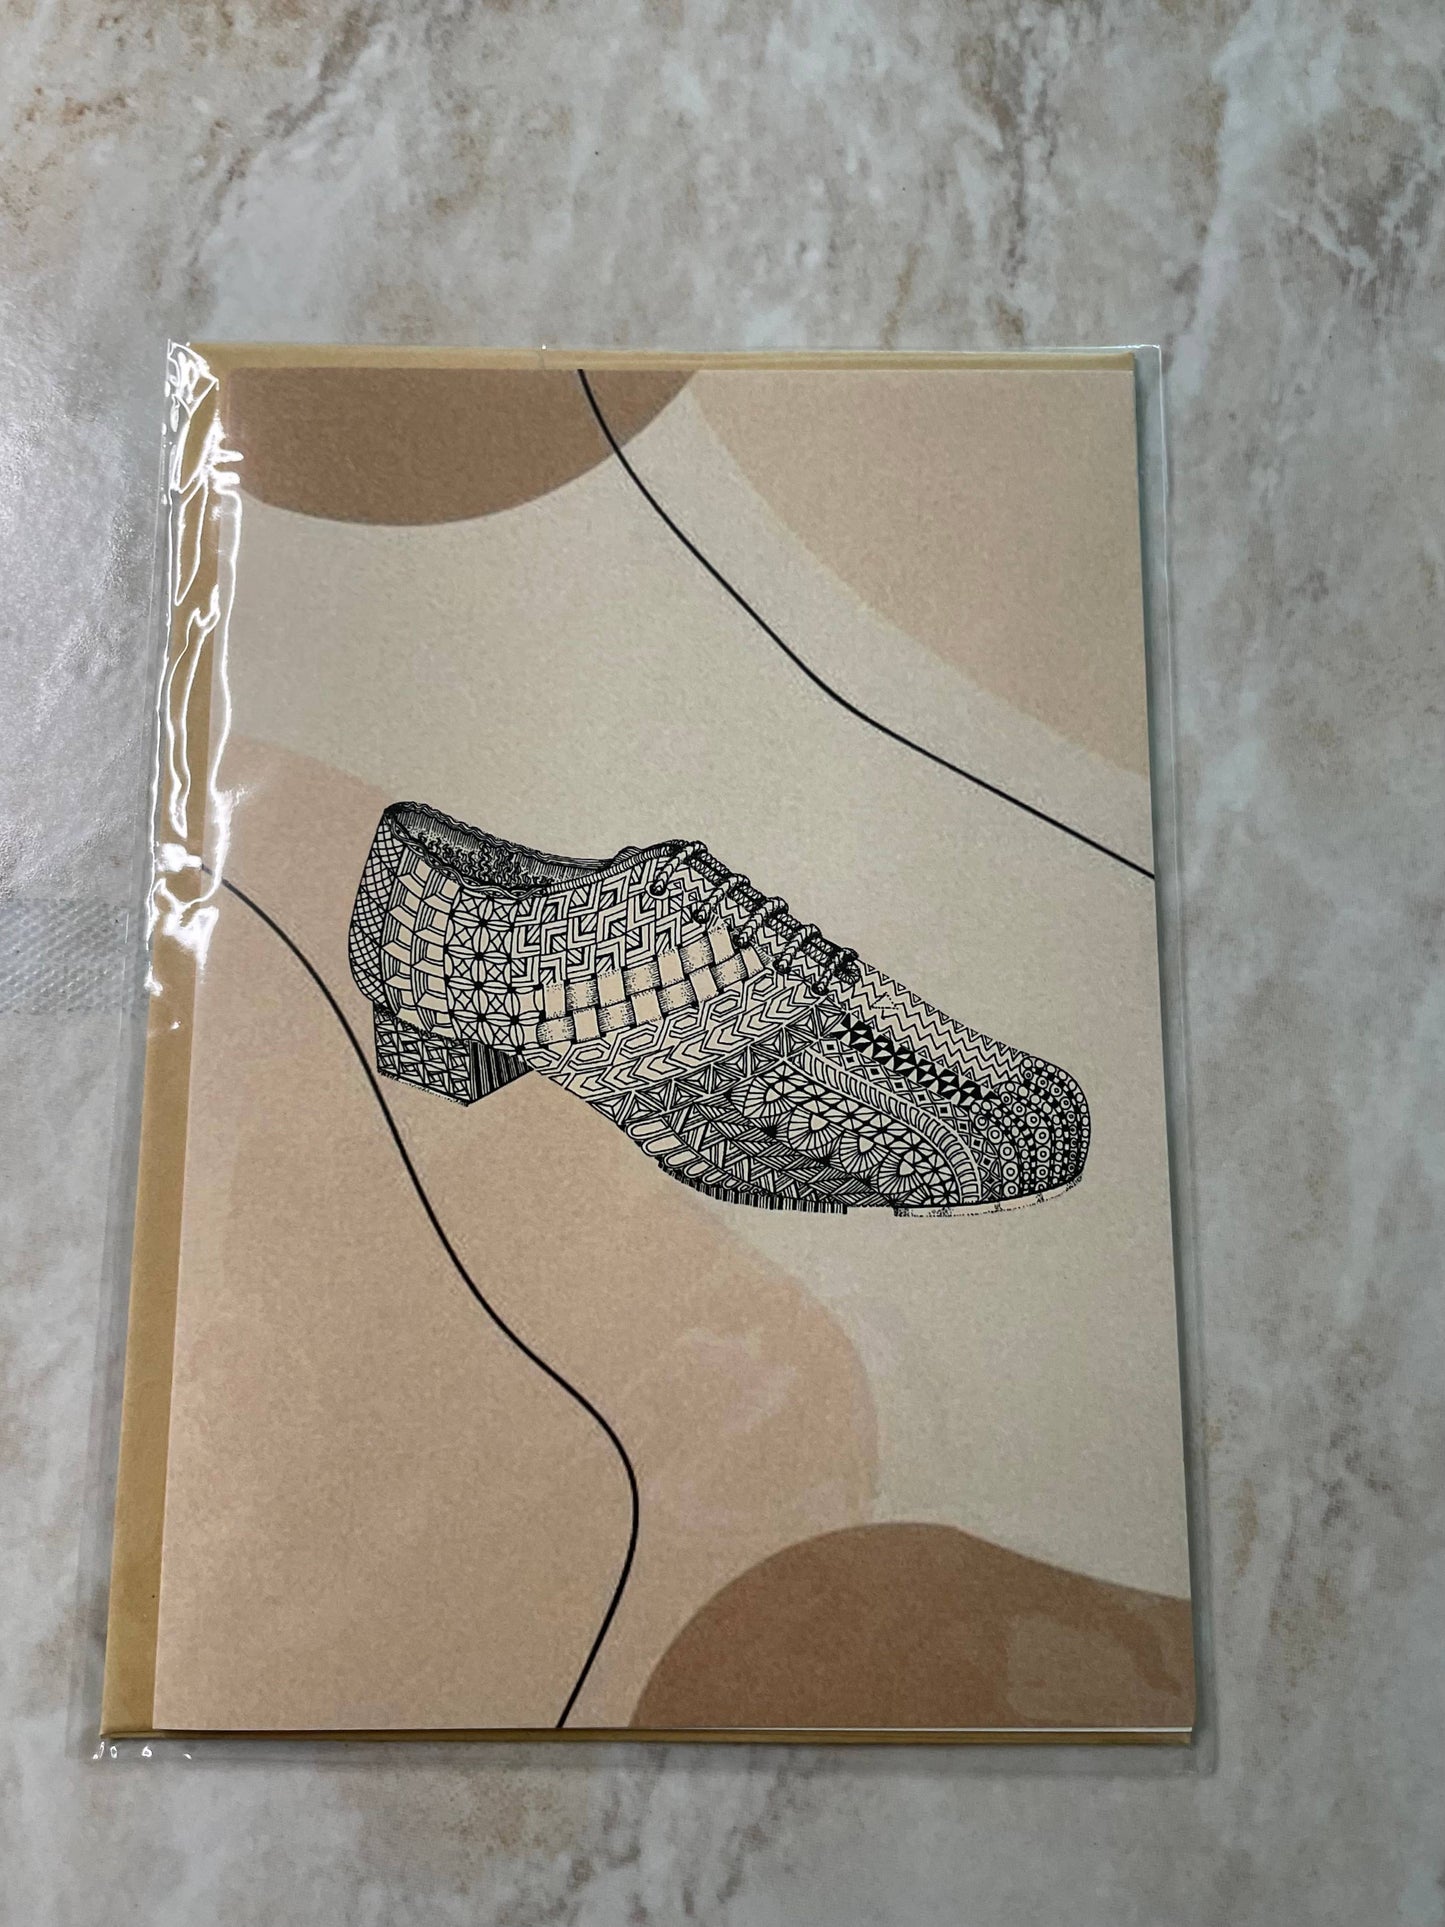 Denali & Co. Dance Shoes Greeting Cards: Pointe Shoe